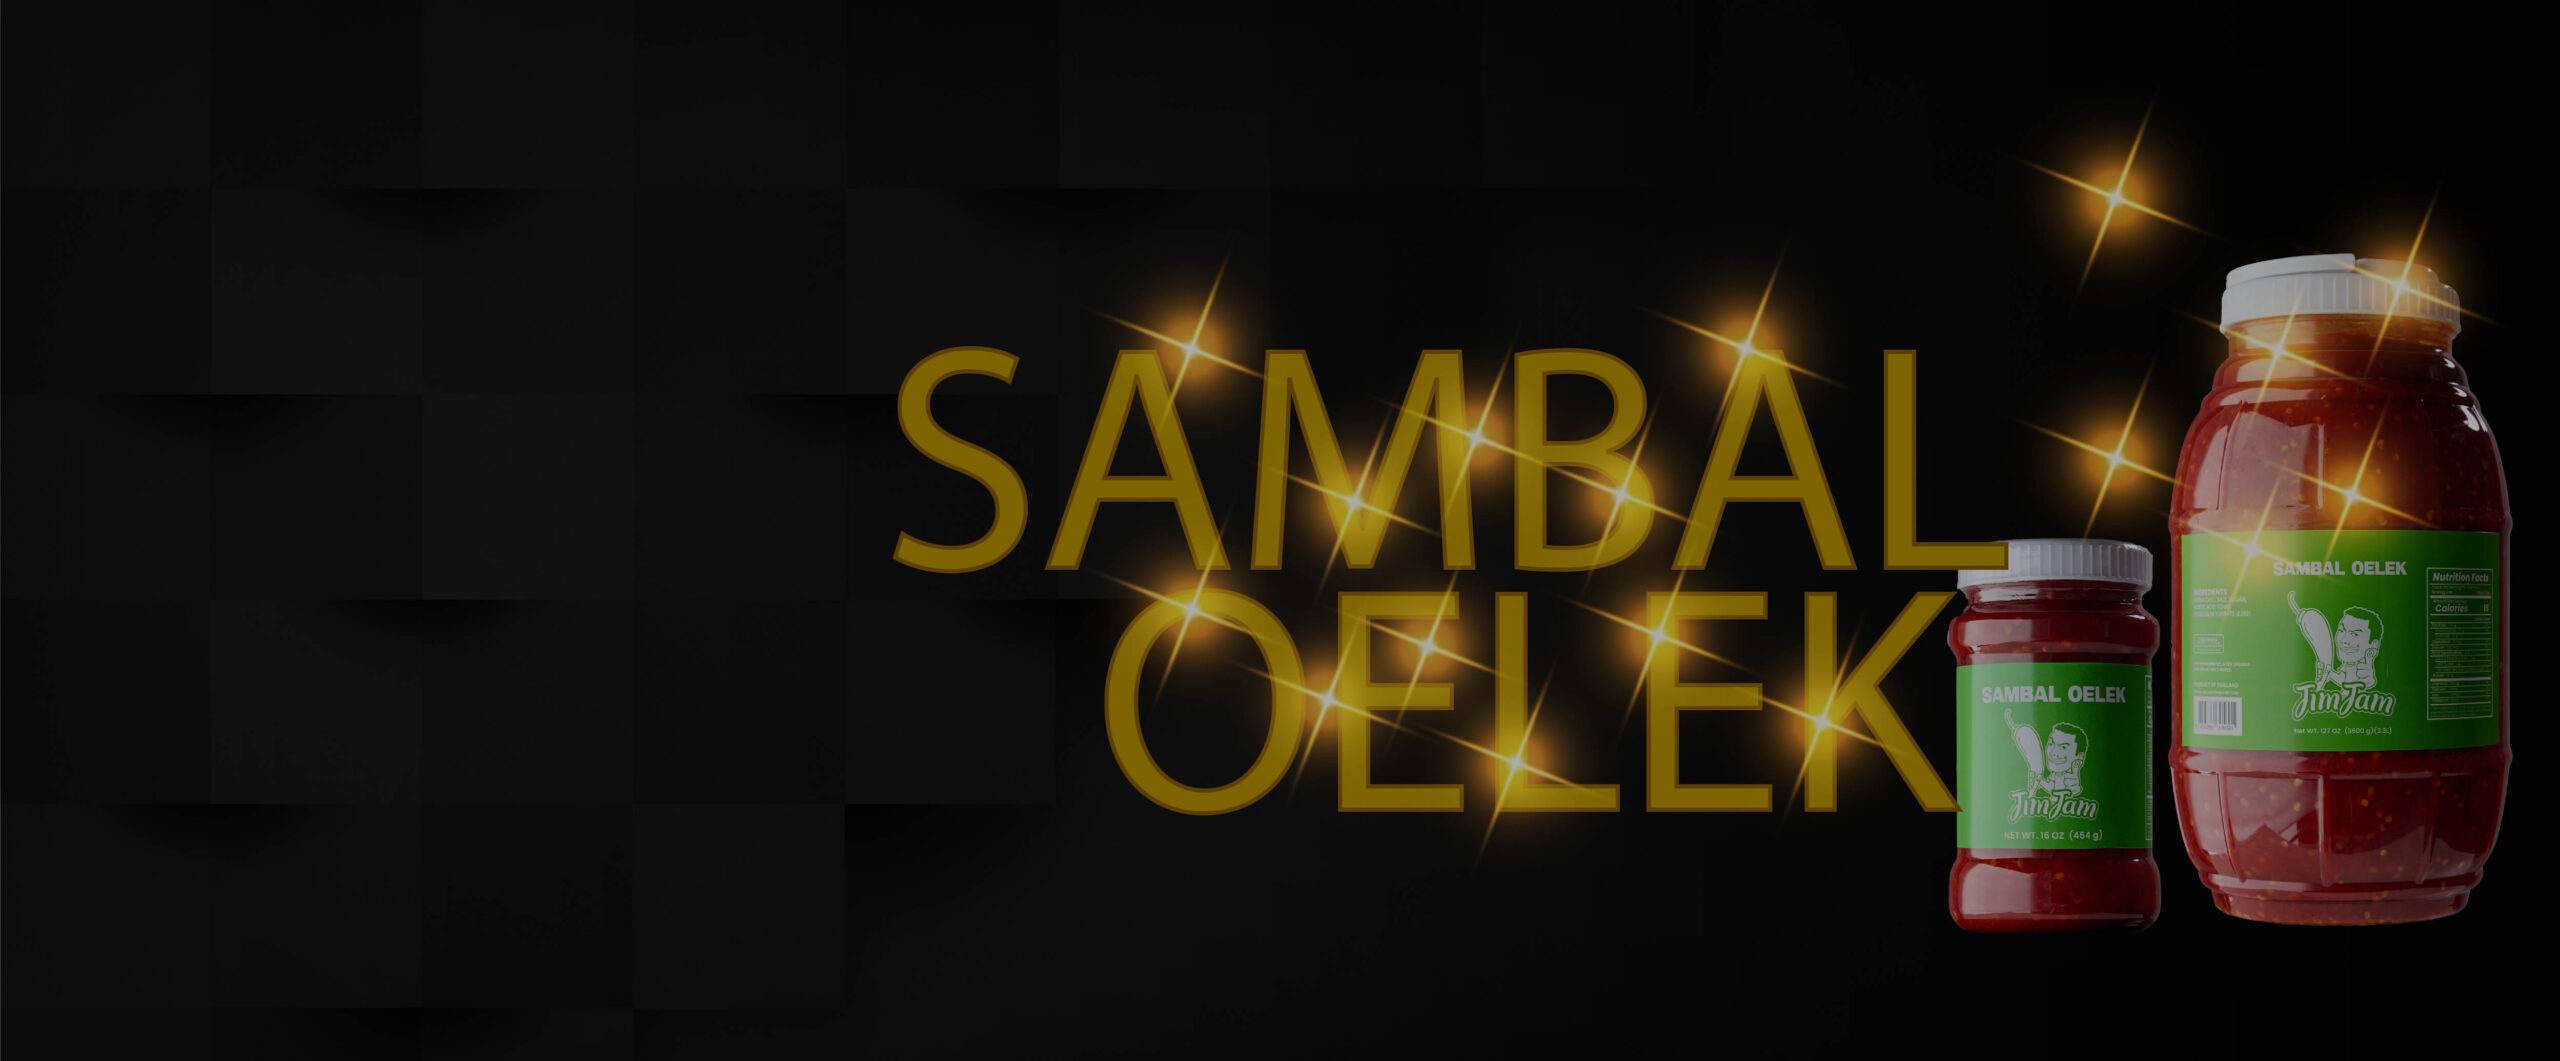 SAMBAL OELEK